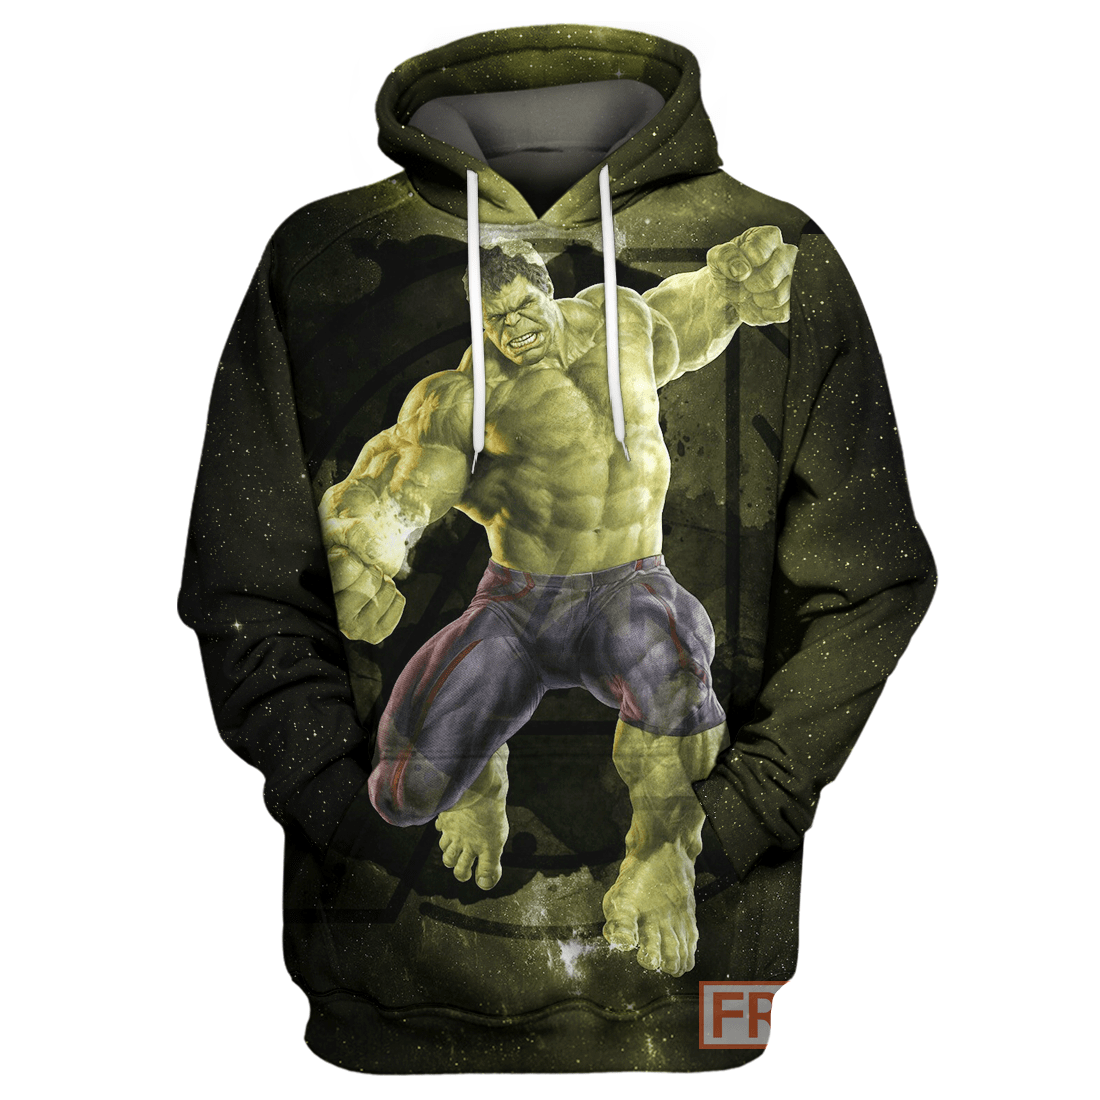 Unifinz MV Hulk Hoodie The Incredible H Galaxy T-shirt Amazing MV Hulk Shirt Sweater Tank 2022